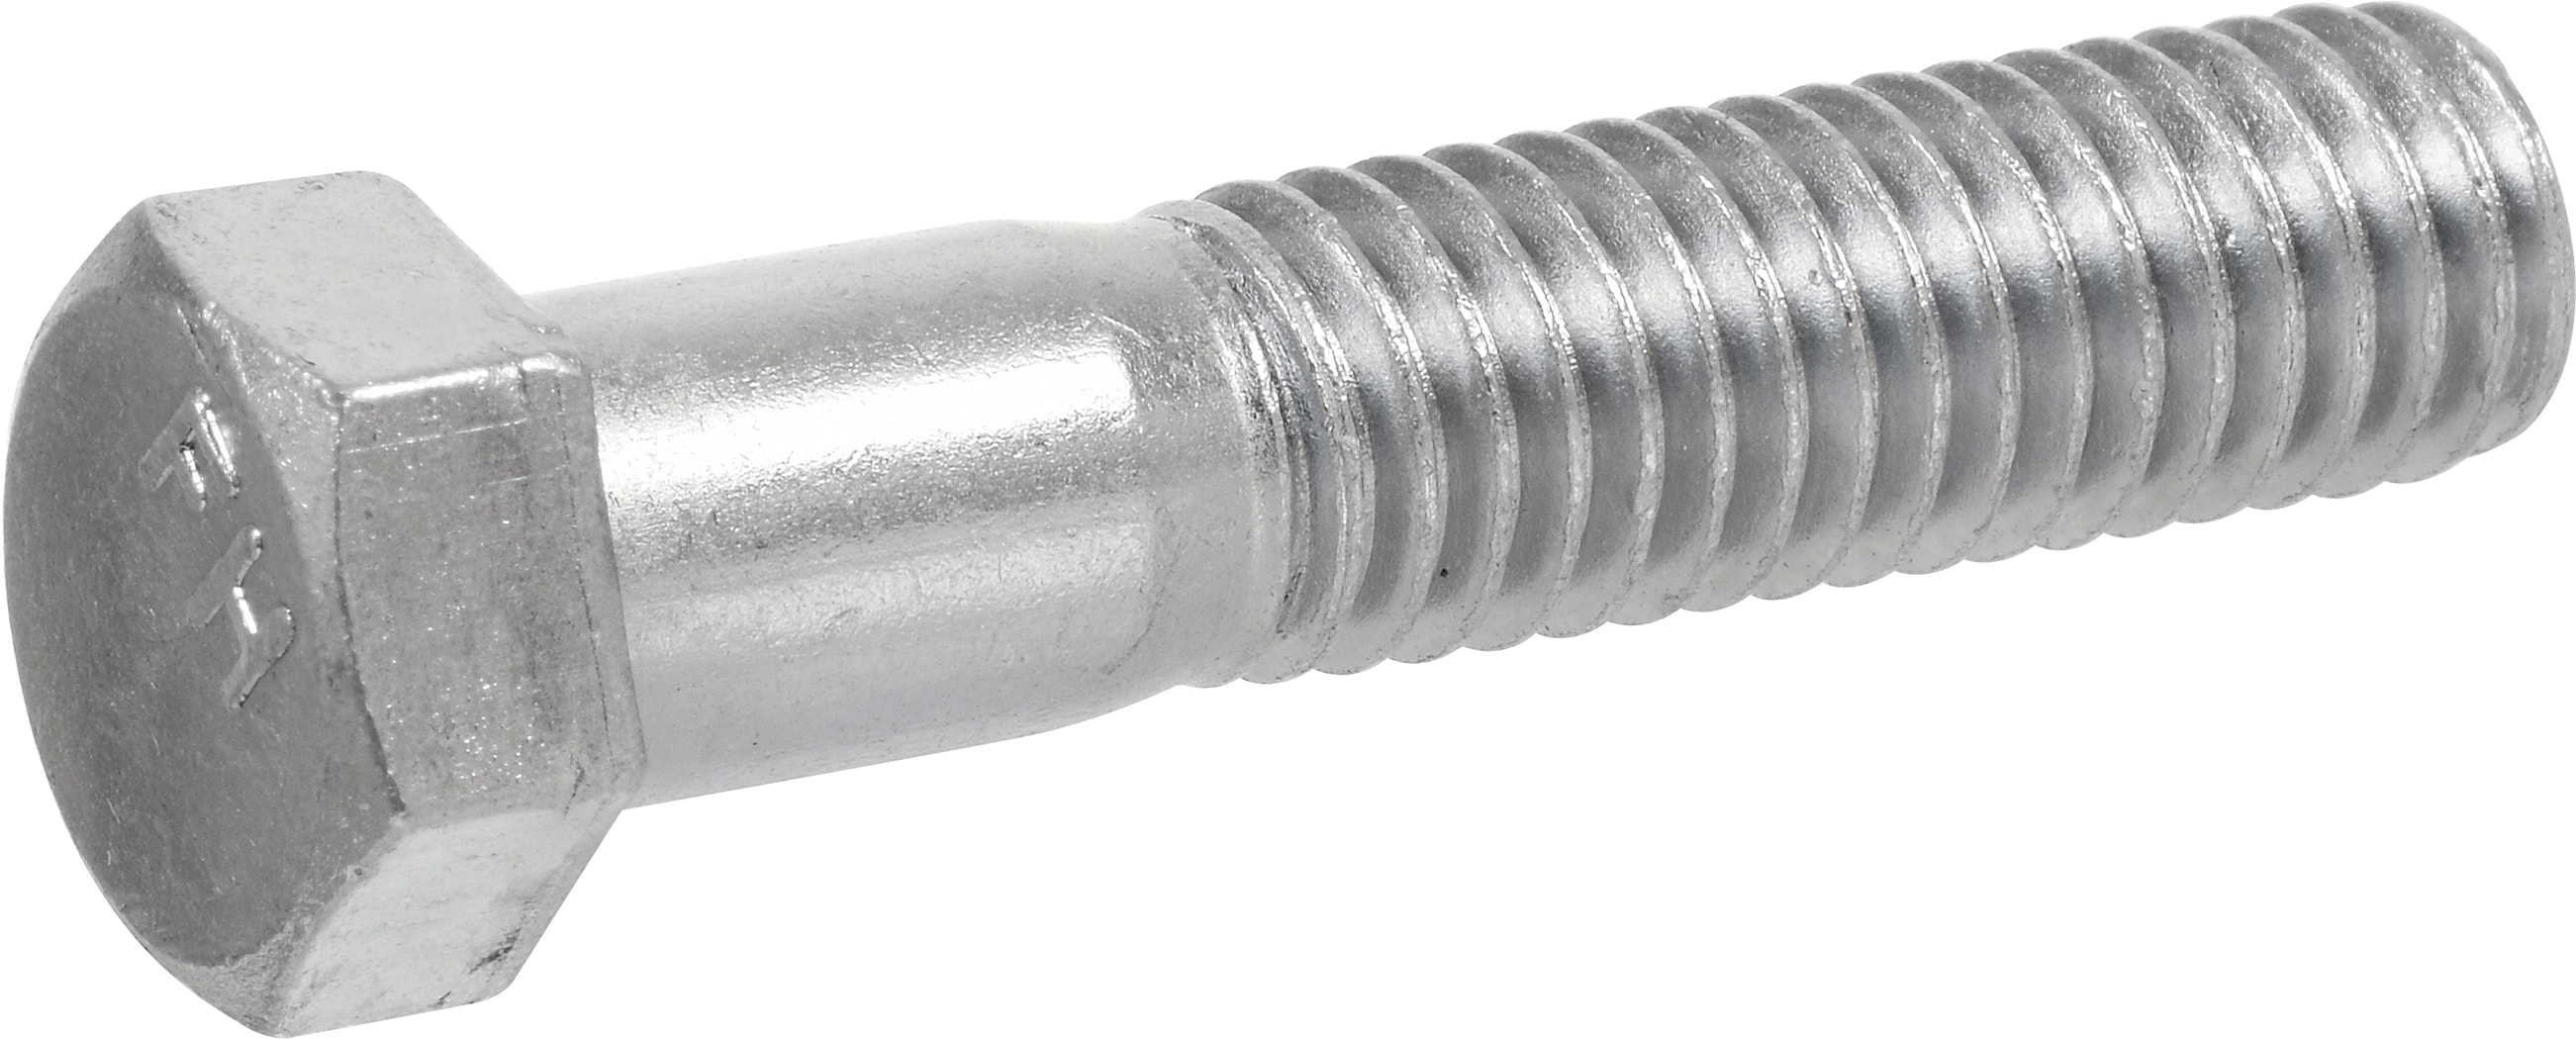 18-8 Stainless Steel Brass Tip Set Screw 1/4-28 x .375 Thread Length 20  pcs